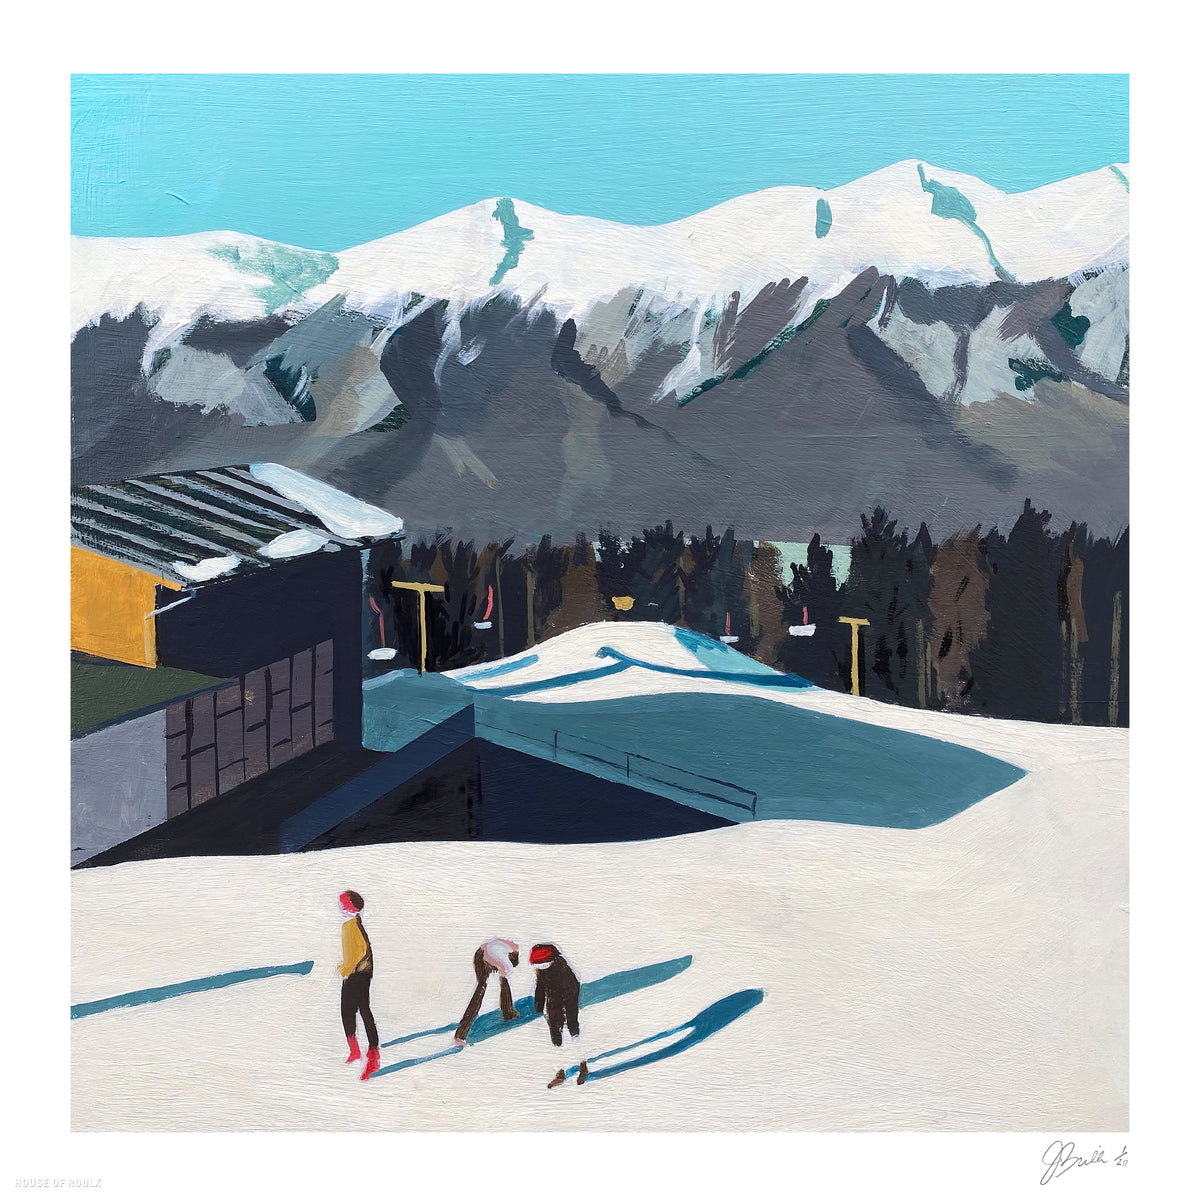 Jessica Brilli &quot;Garmisch Ski Resort, 1971, #1&quot; - Archival Print, Limited Edition of 20 - 17 x 17&quot;